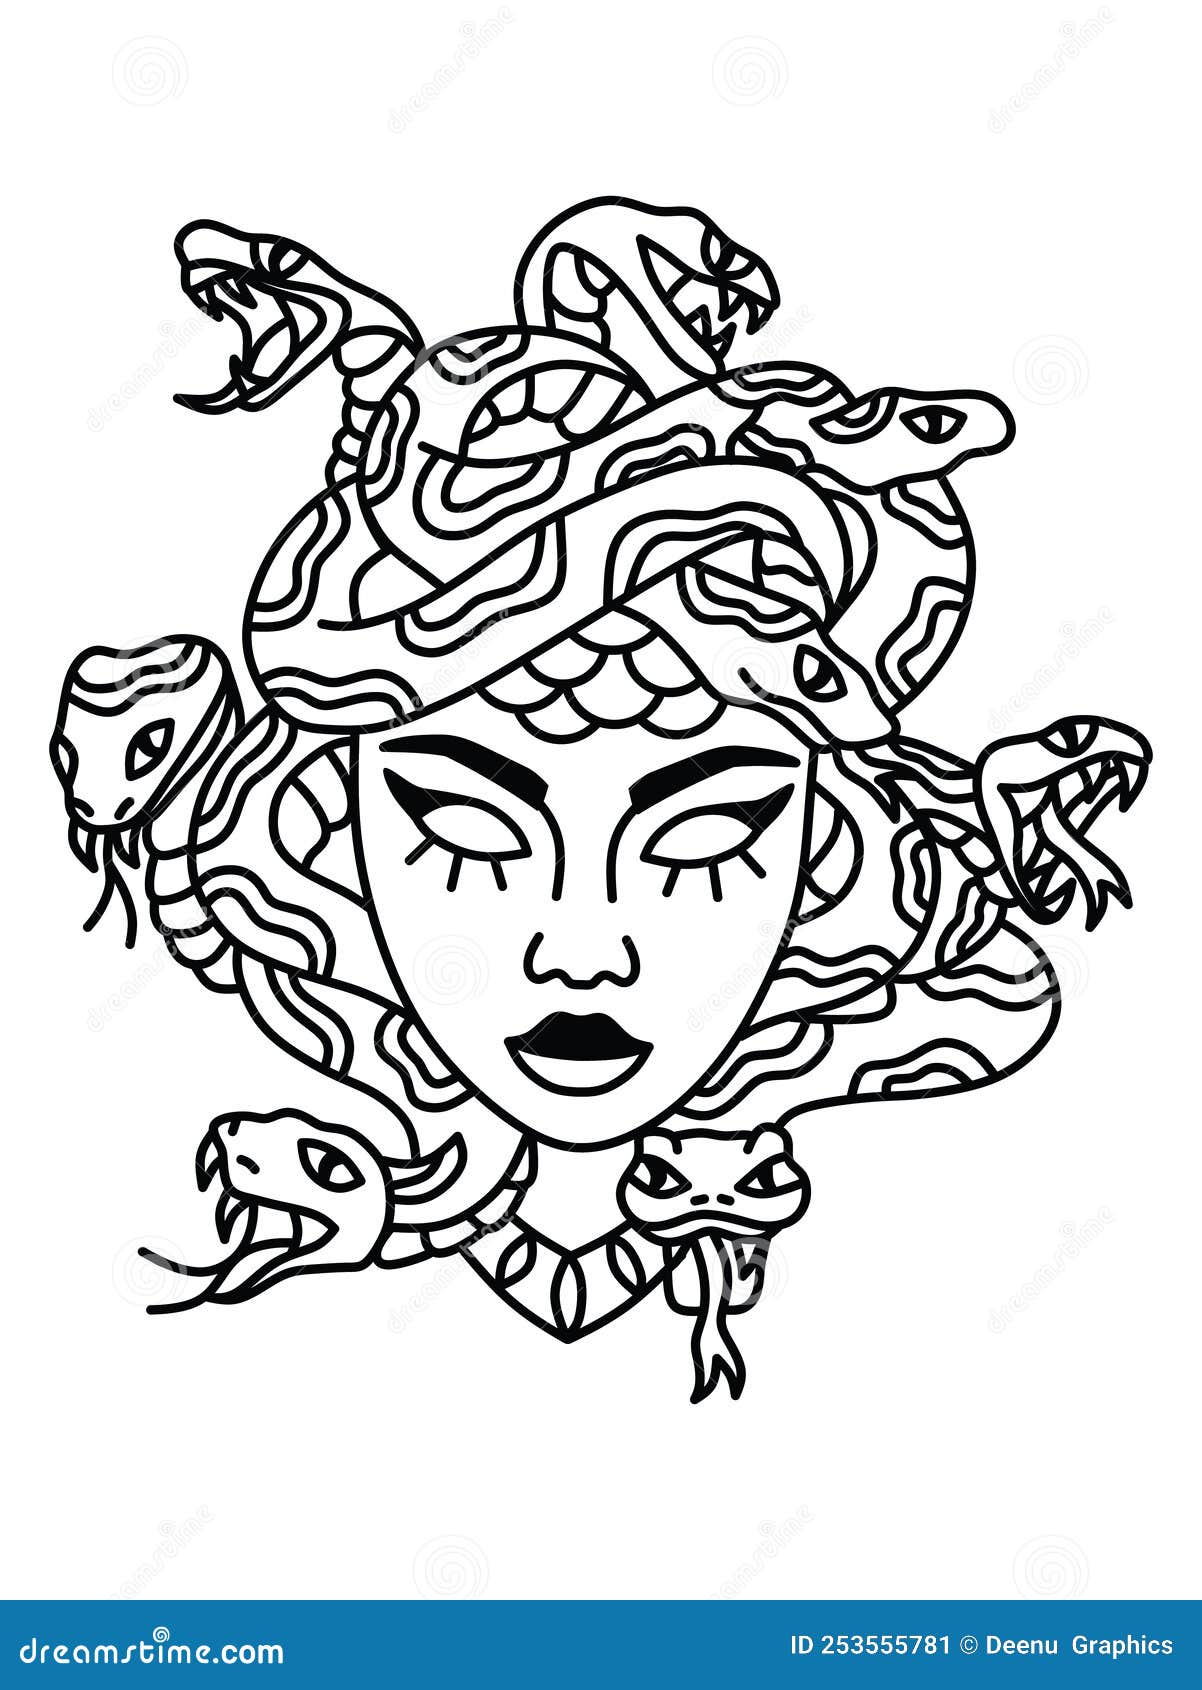 Medusa Snakes Mythology Royalty-Free Stock Image | CartoonDealer.com ...